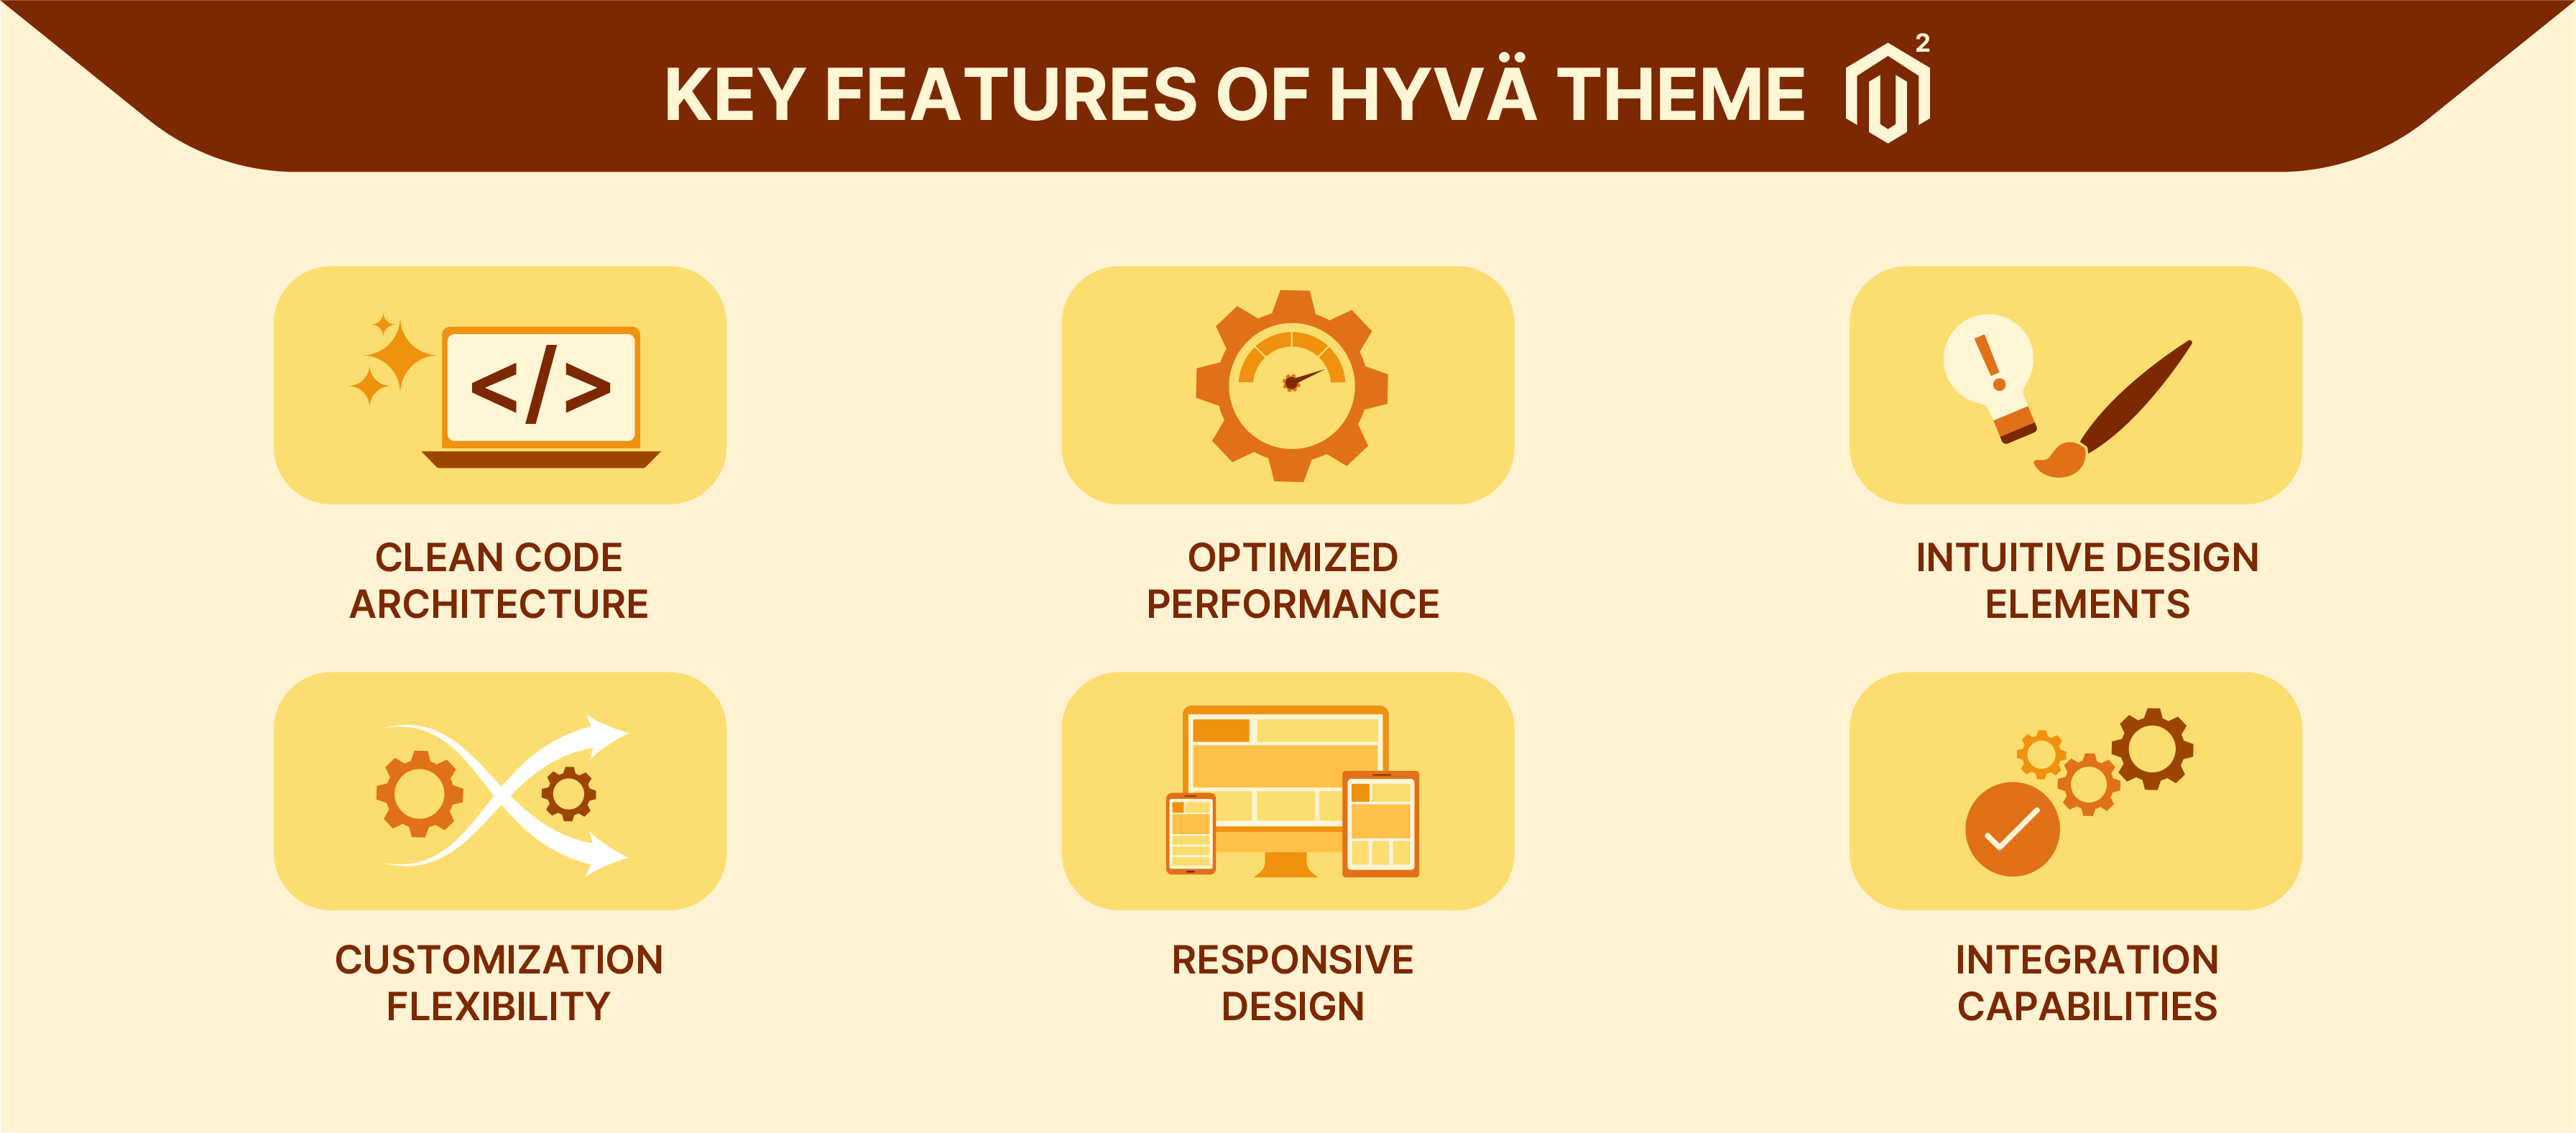 Hyva Theme Features